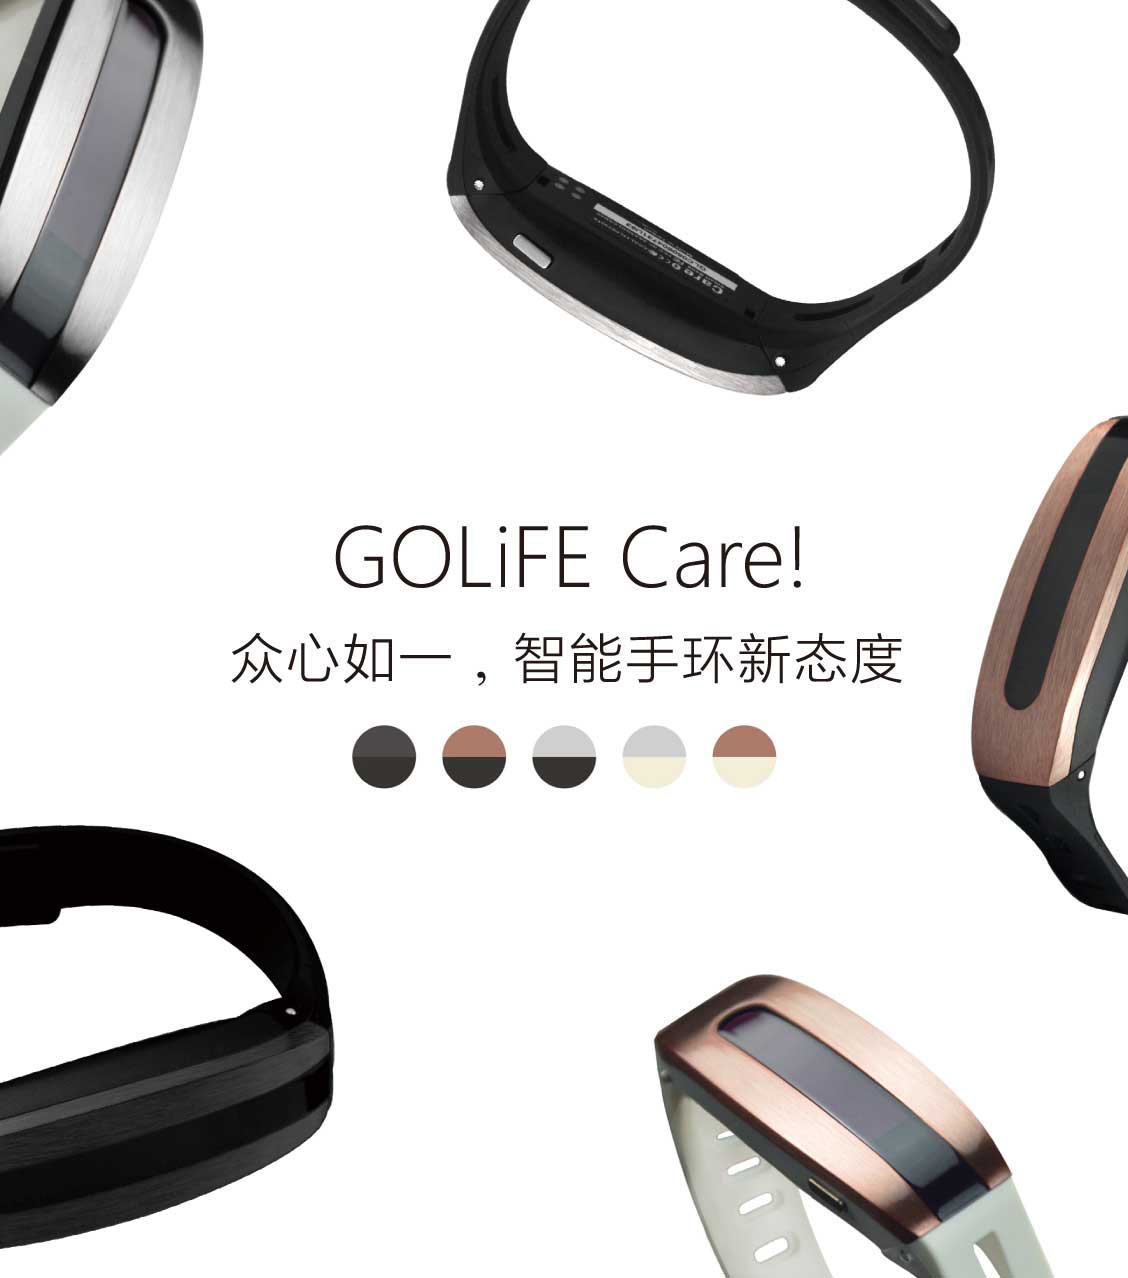 GOLiFE Care! 众心如一，智能手环新态度